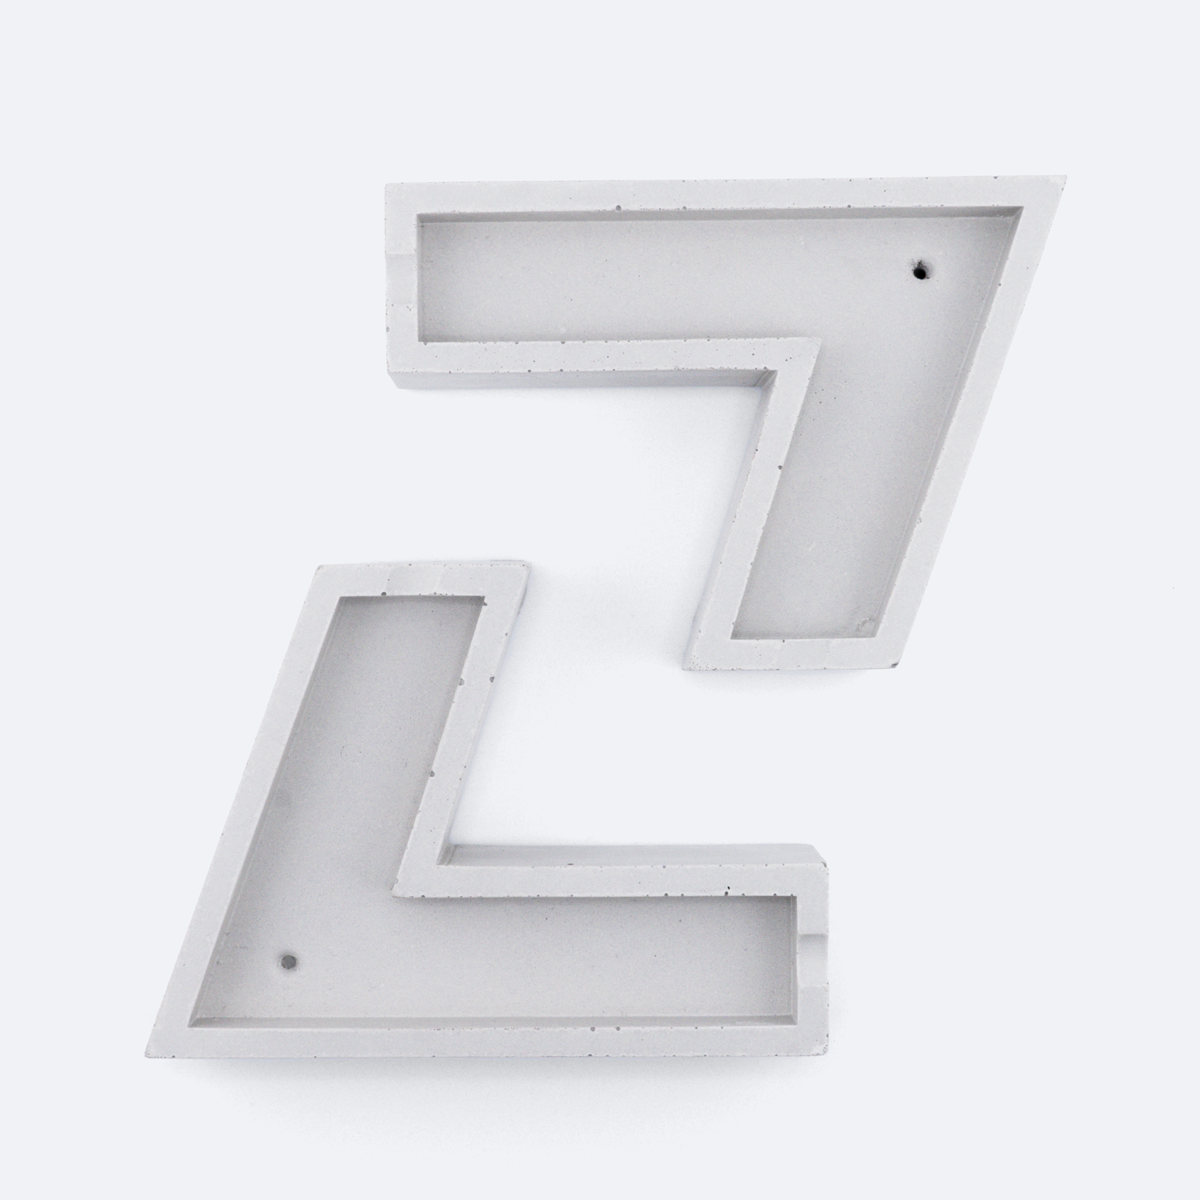 The Z